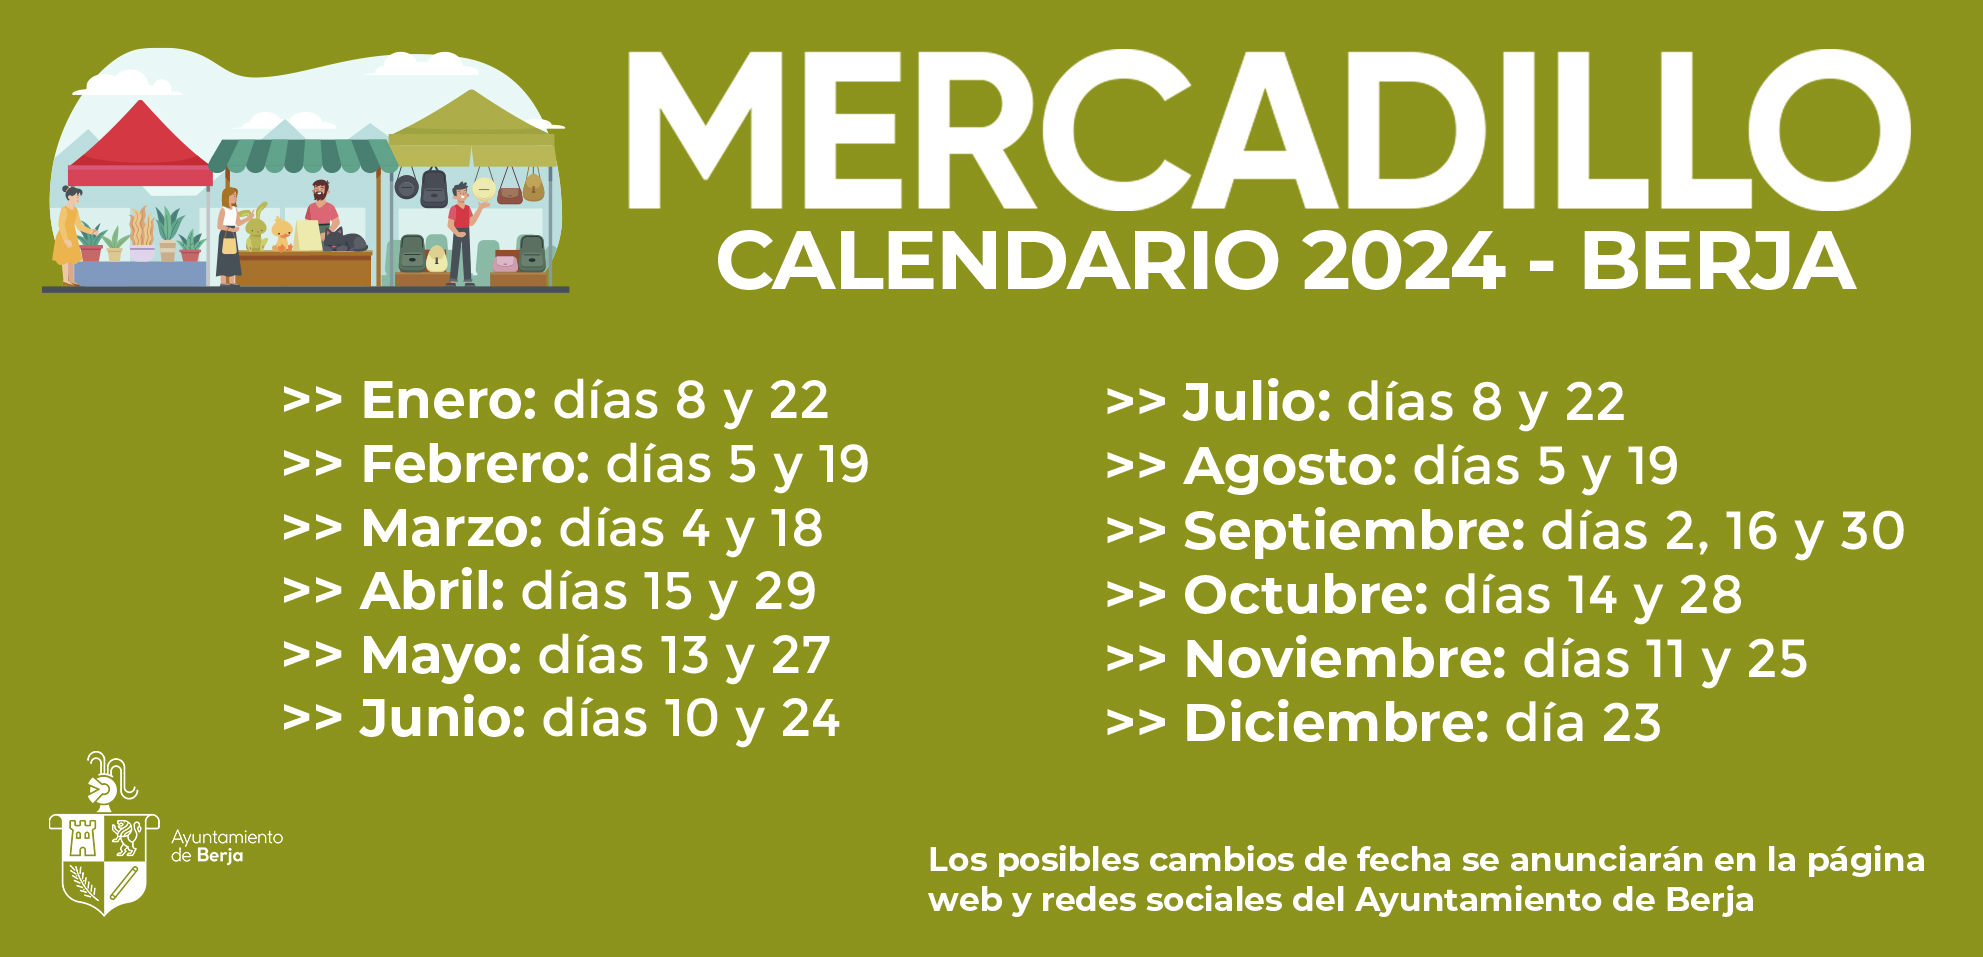 Calendario del Mercadillo 2024